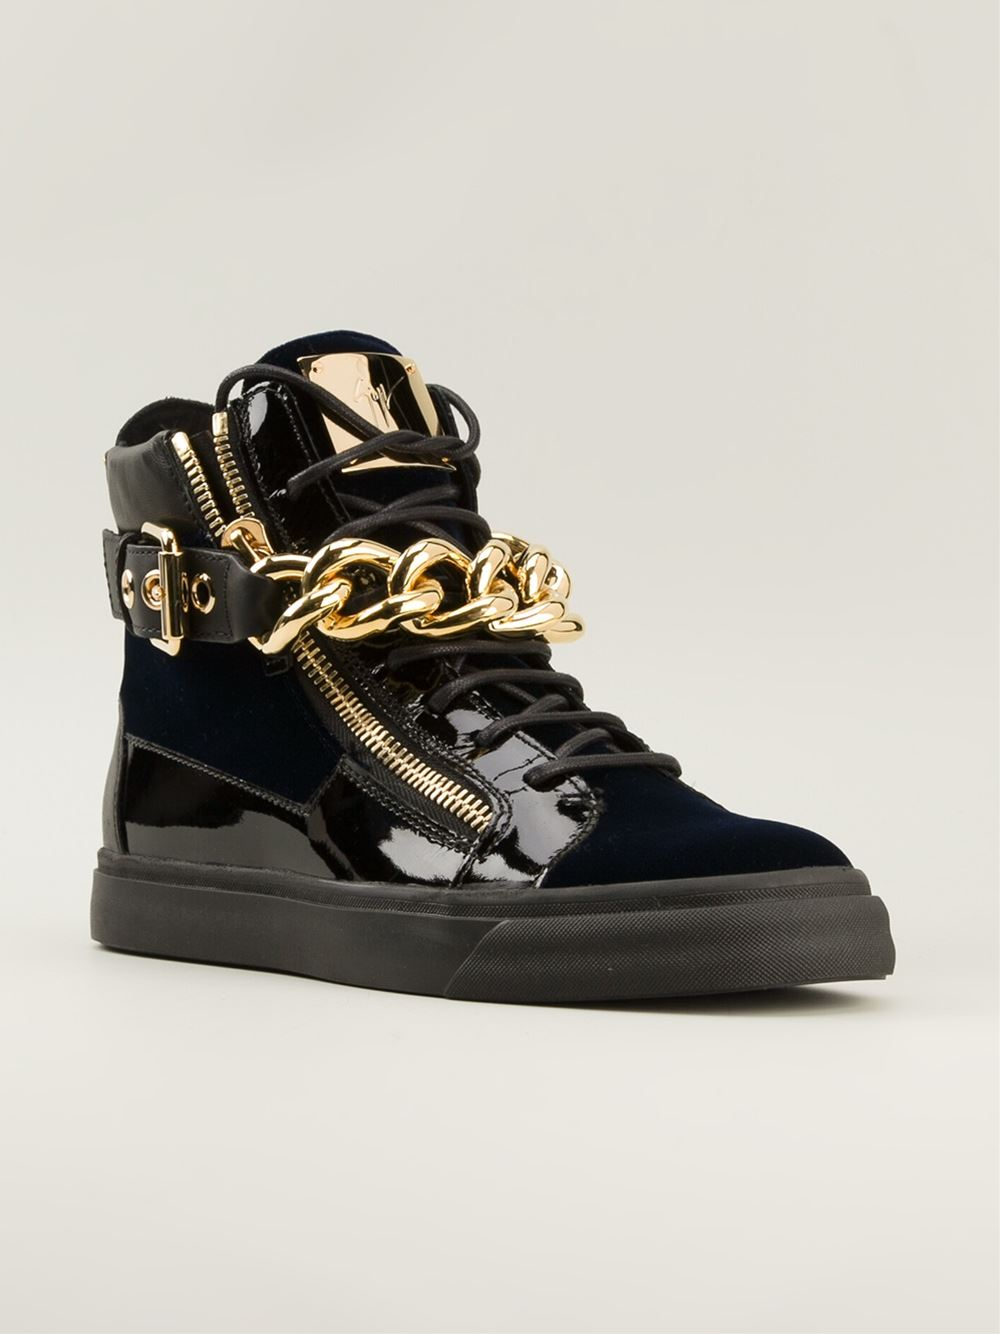 Lyst - Giuseppe Zanotti Gold Chain Strap Hitop Sneakers in Black for Men